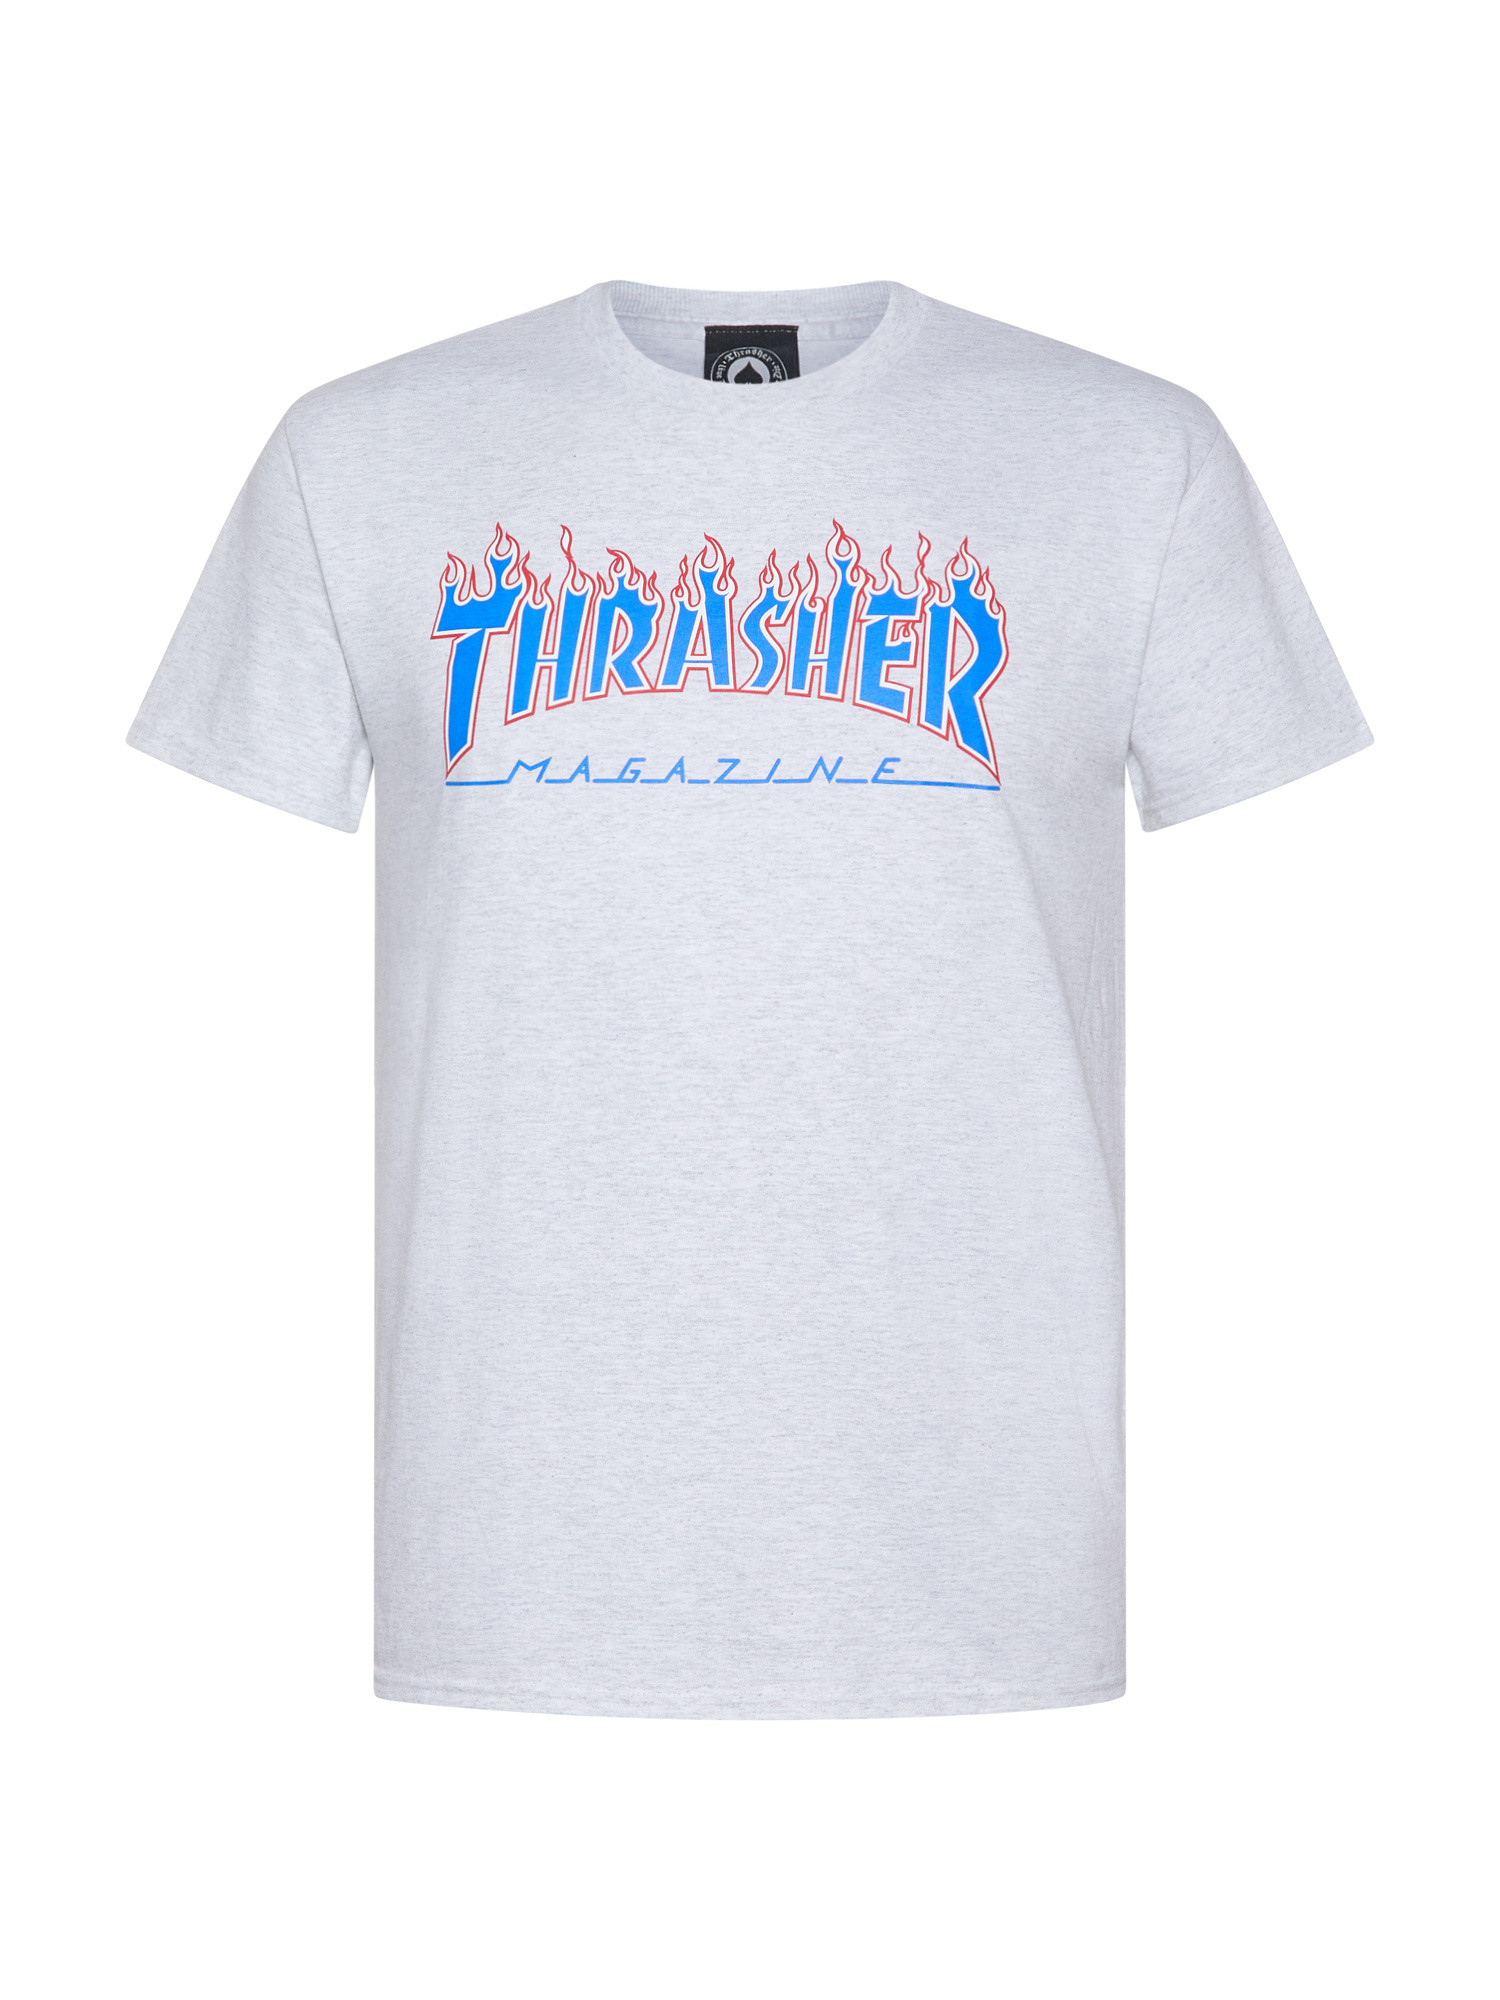 Thrasher - T-Shirt con stampa, Grigio chiaro, large image number 0